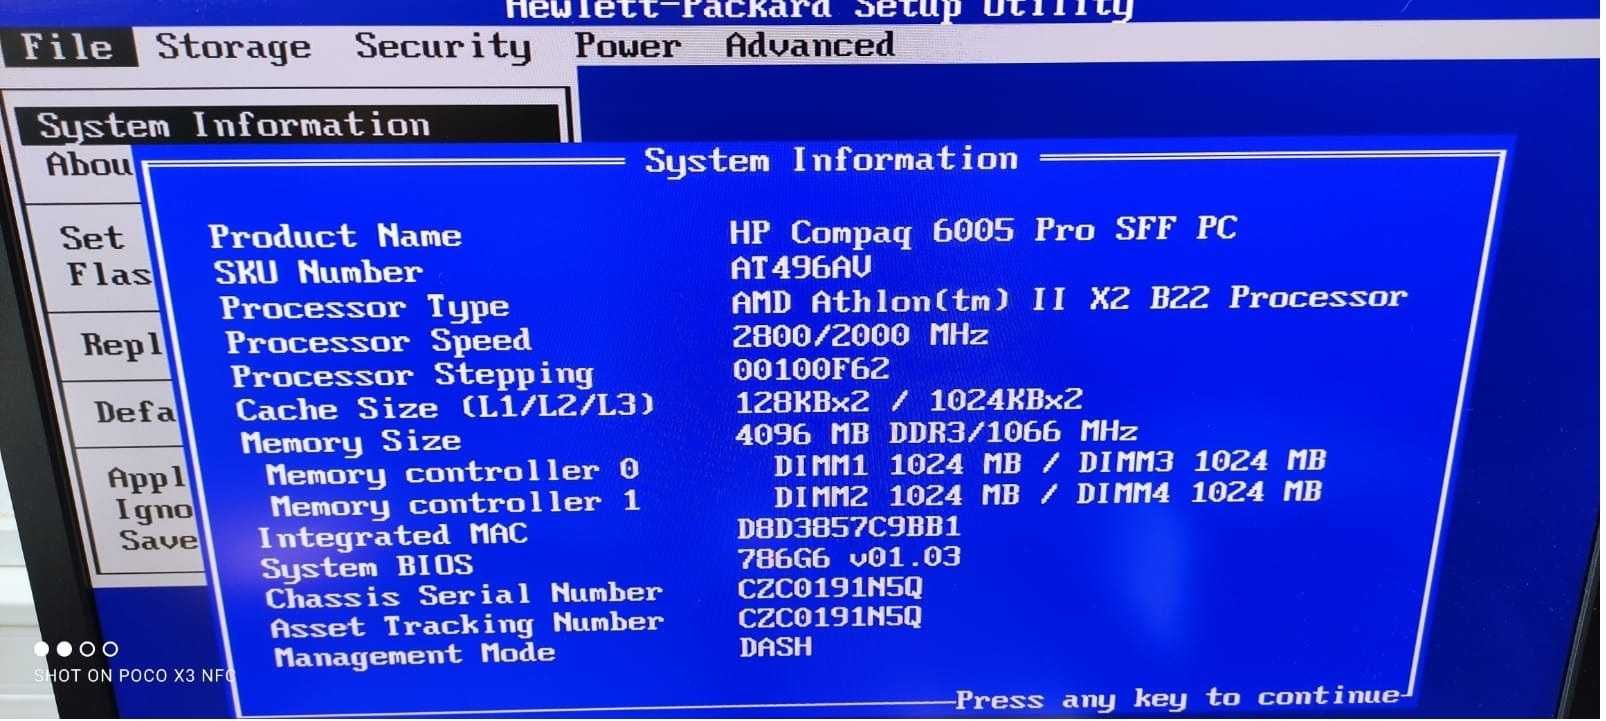 HP Compaq 6005 Pro Small Form Factor PC, second ssd 120Gb nou.